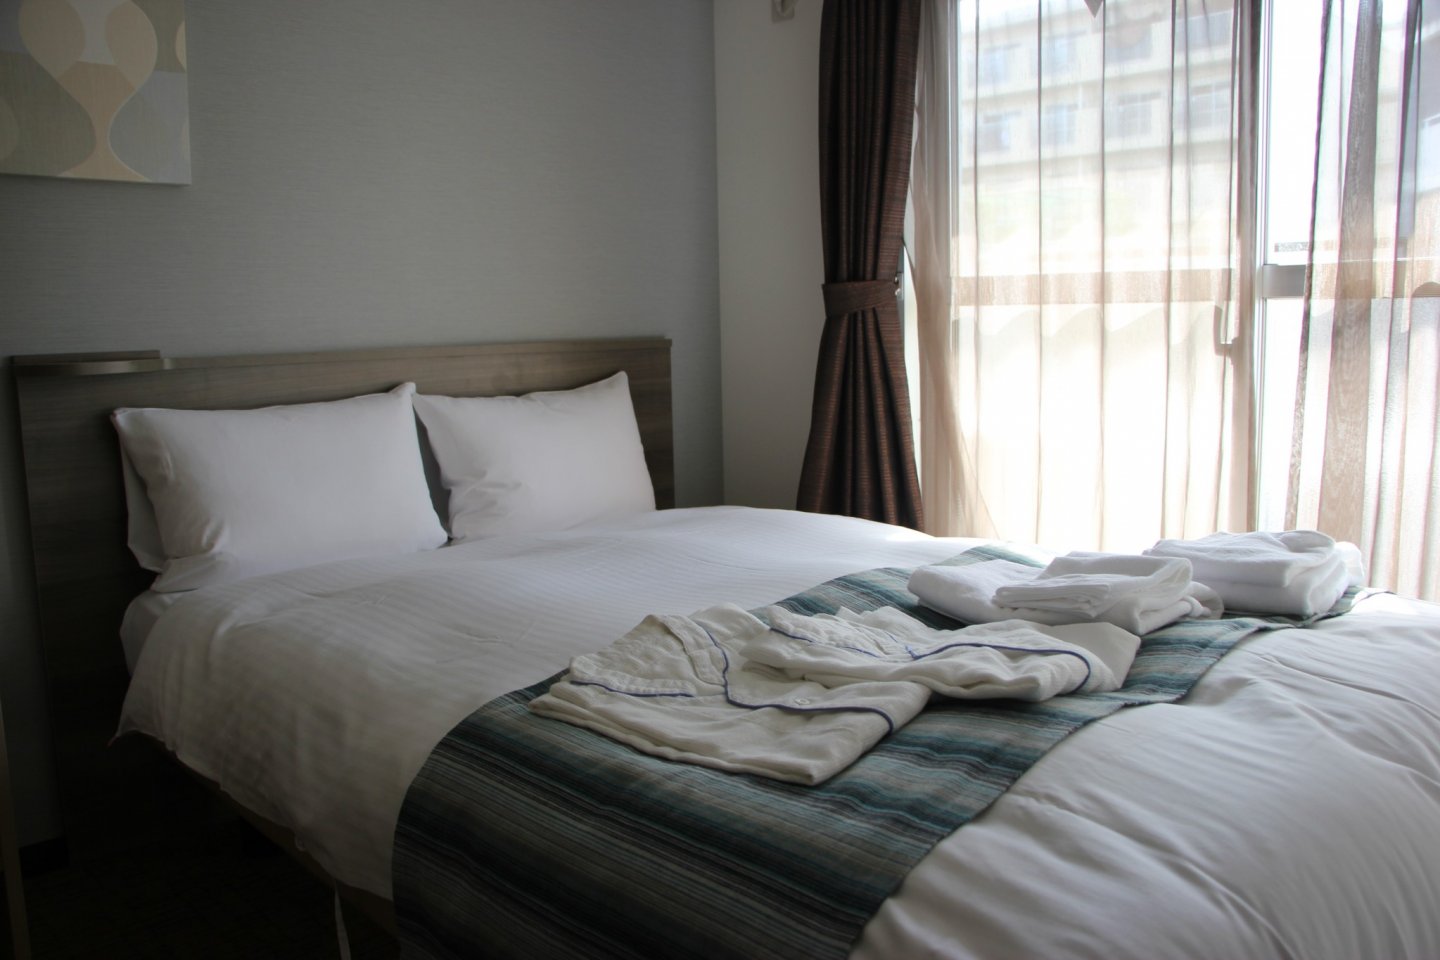 Kamar tidur dilengkapi handuk dan jubah mandi